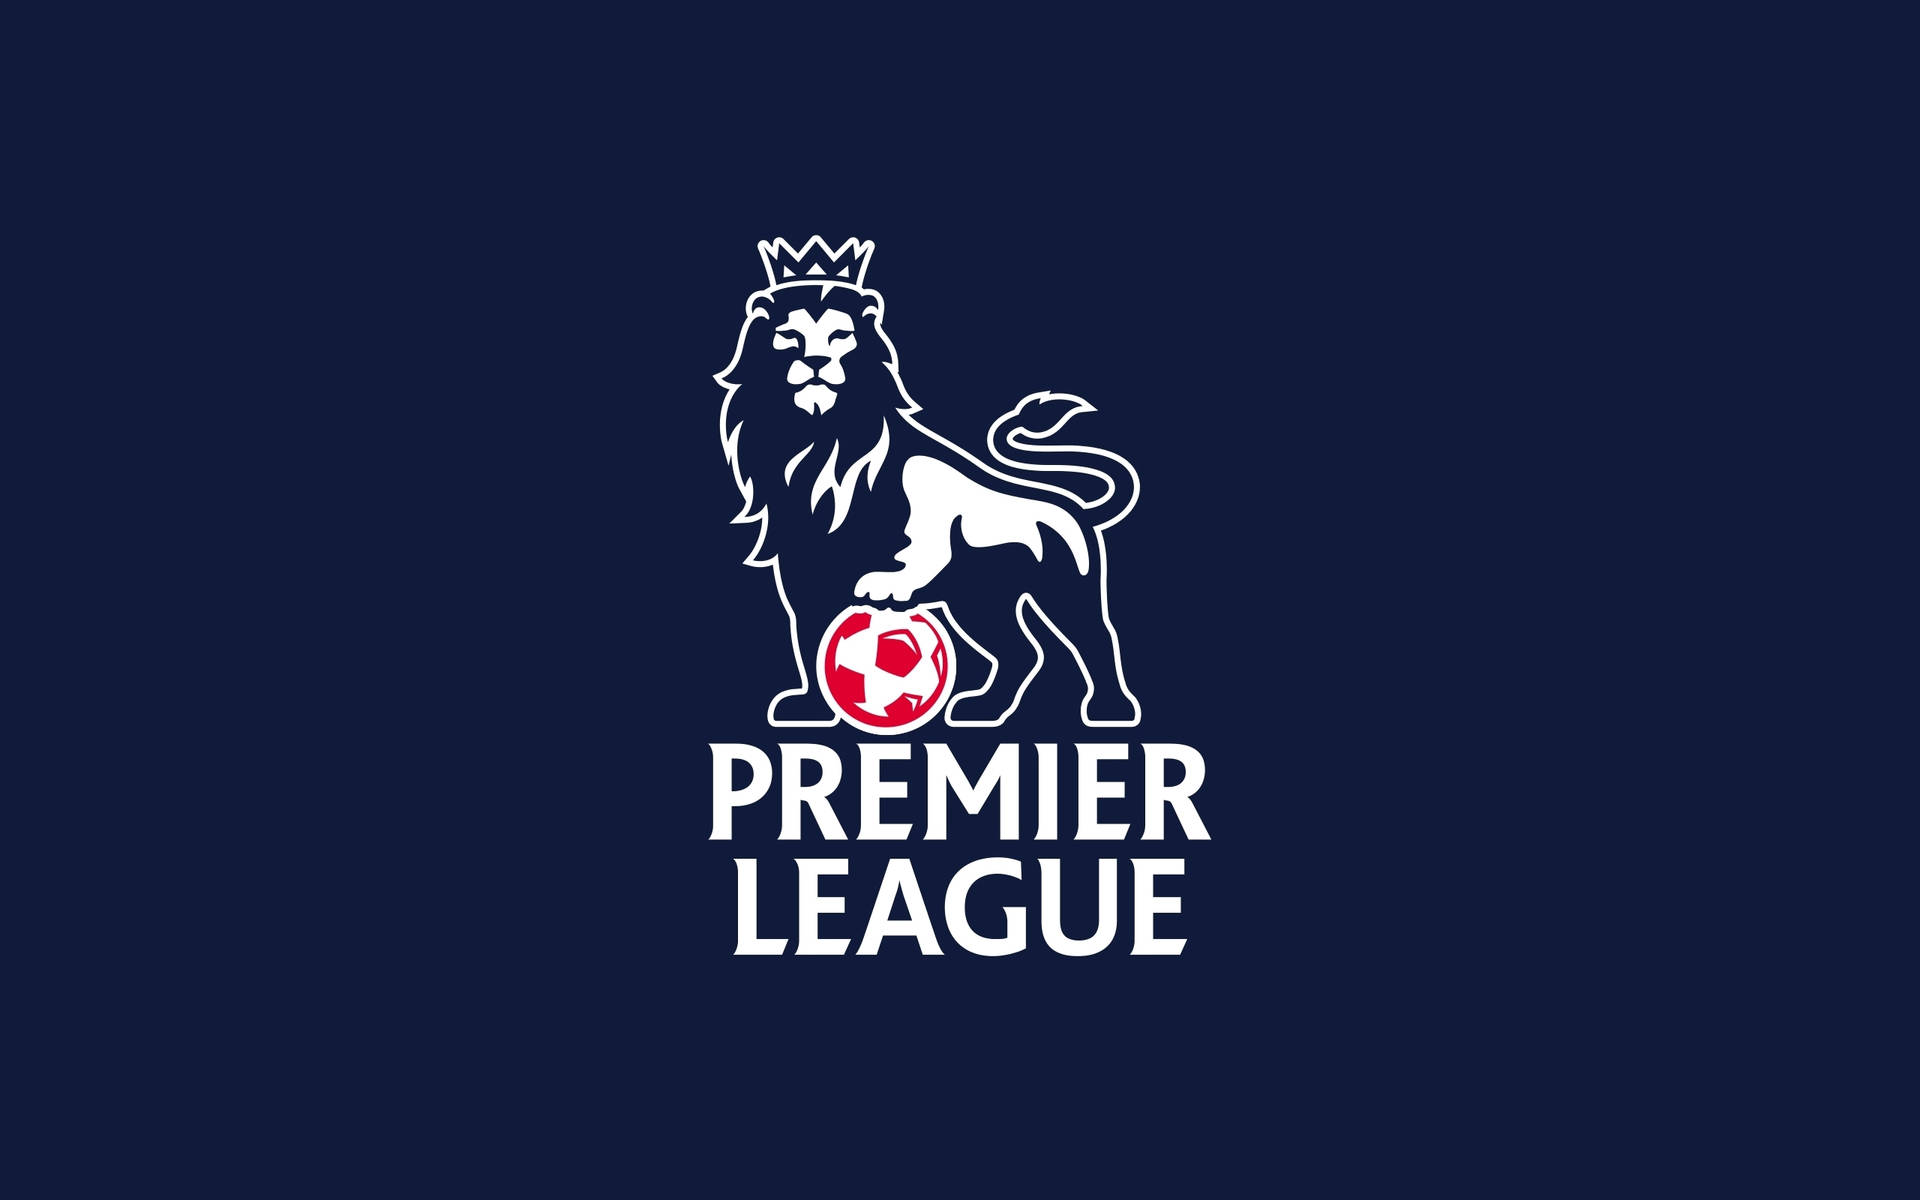 Premier League Logo In Blue Background